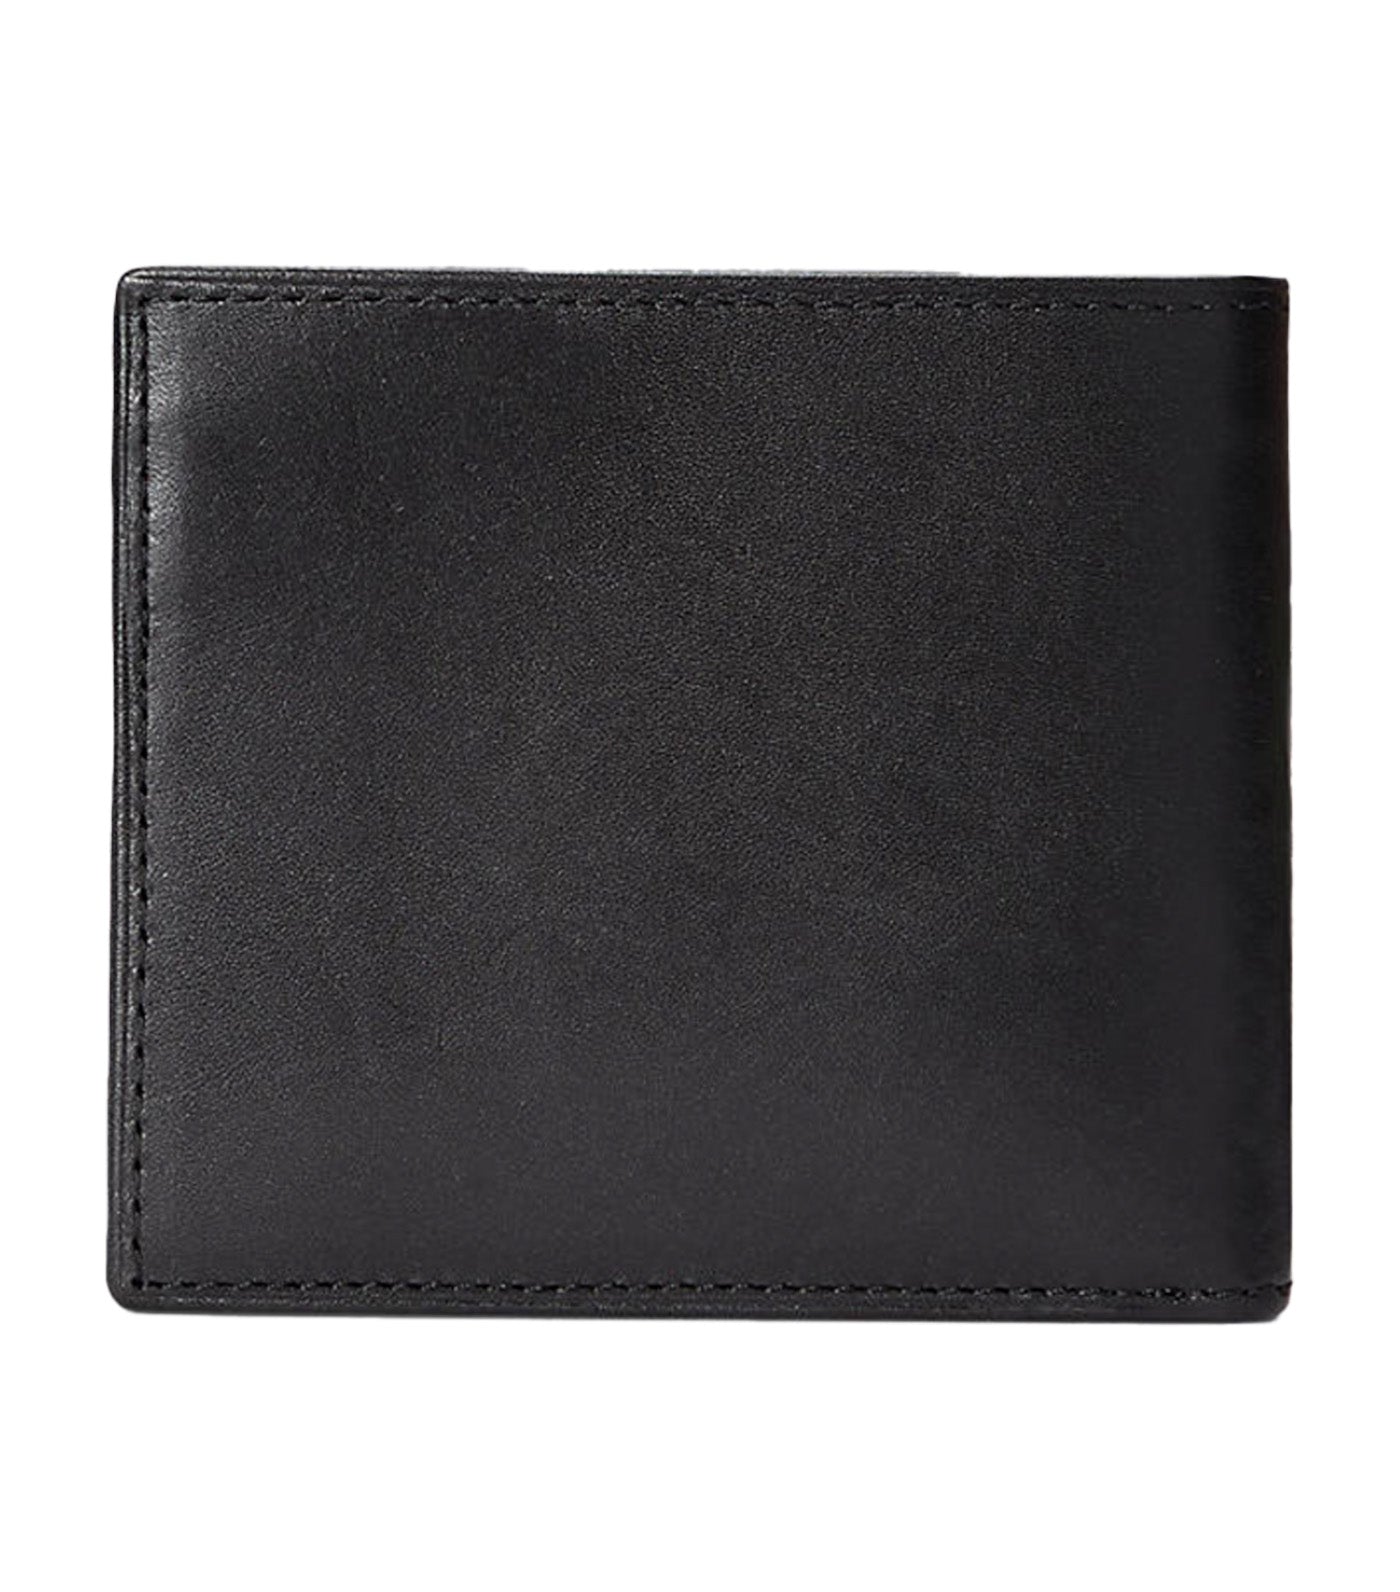 Big Pony Leather Billfold Wallet Black